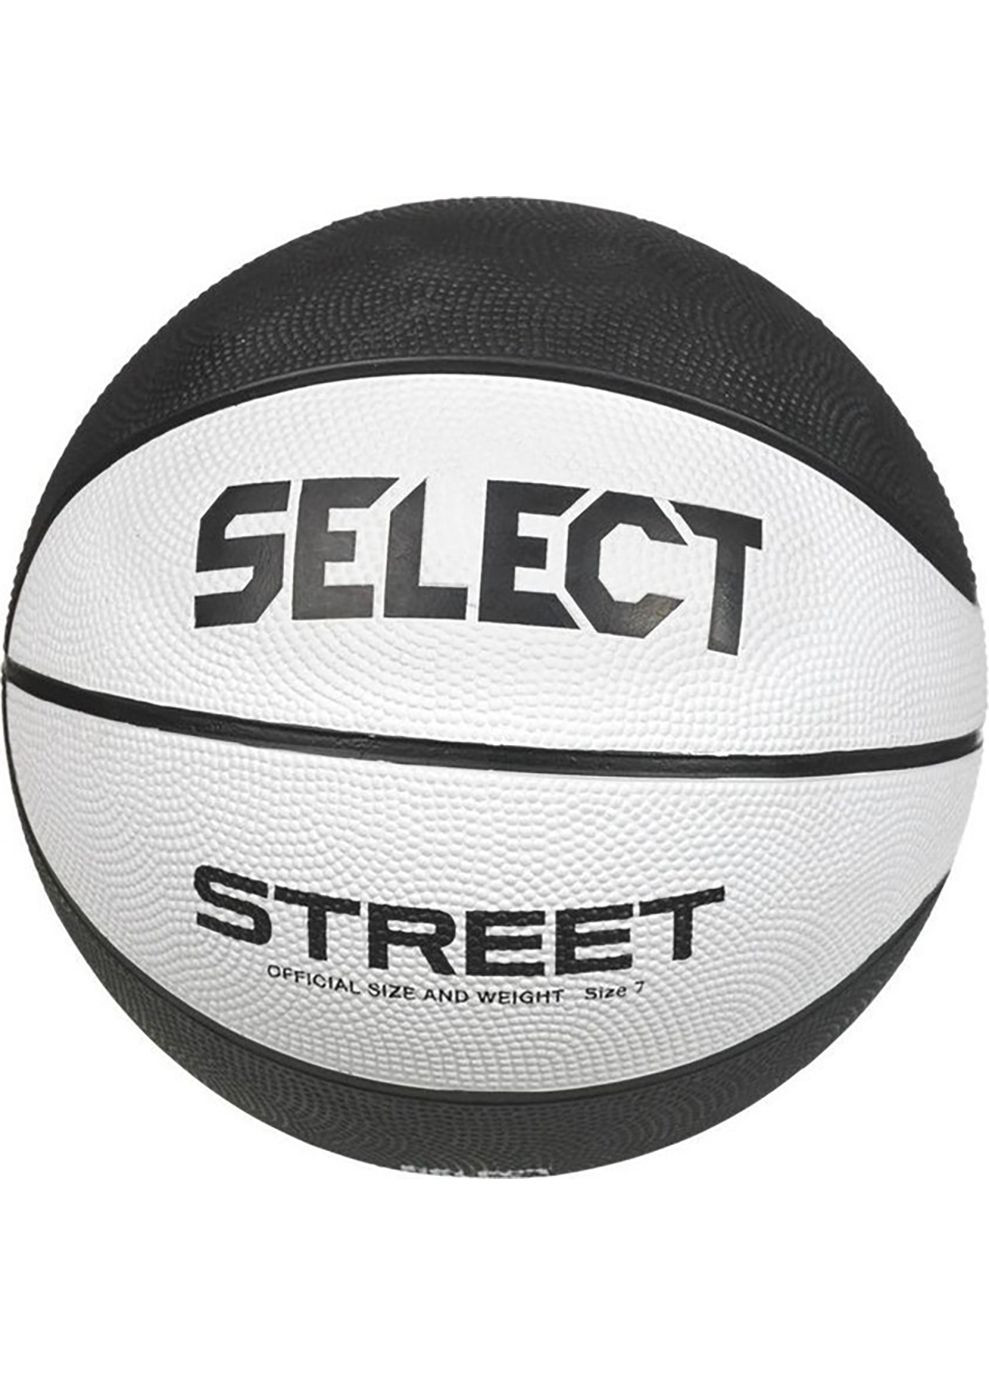 Баскетбольный Мяч BASKETBALL STREET v23 бело-черный Уни 5 Select (268832699)